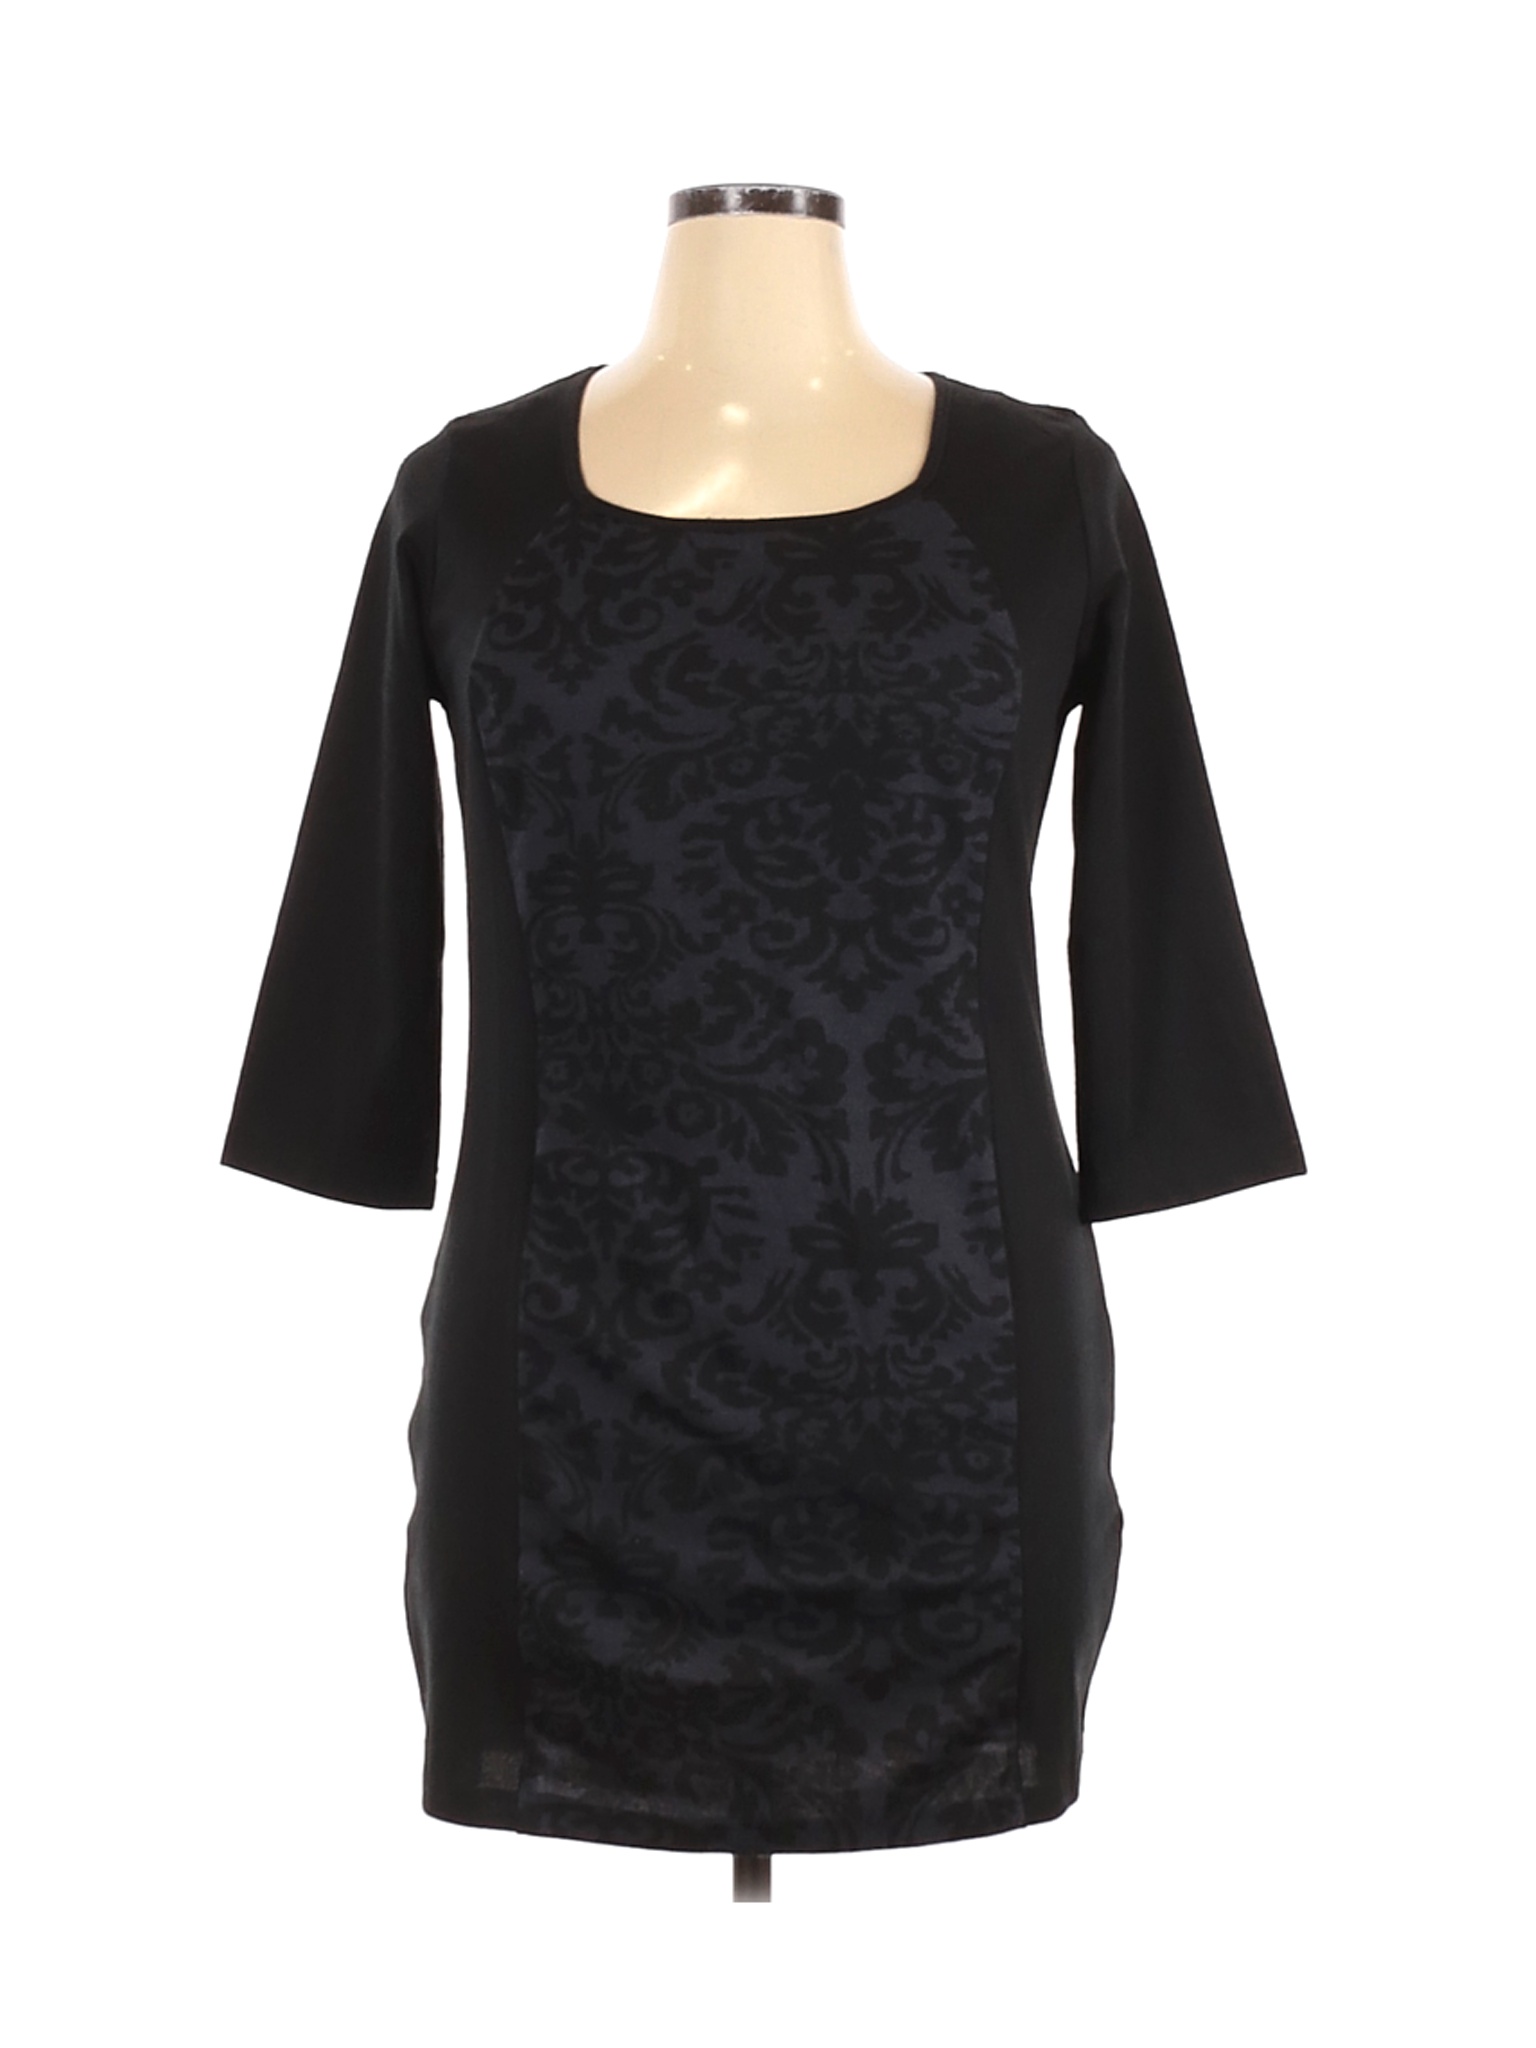 NWT Papillon Women Black Casual Dress XL | eBay